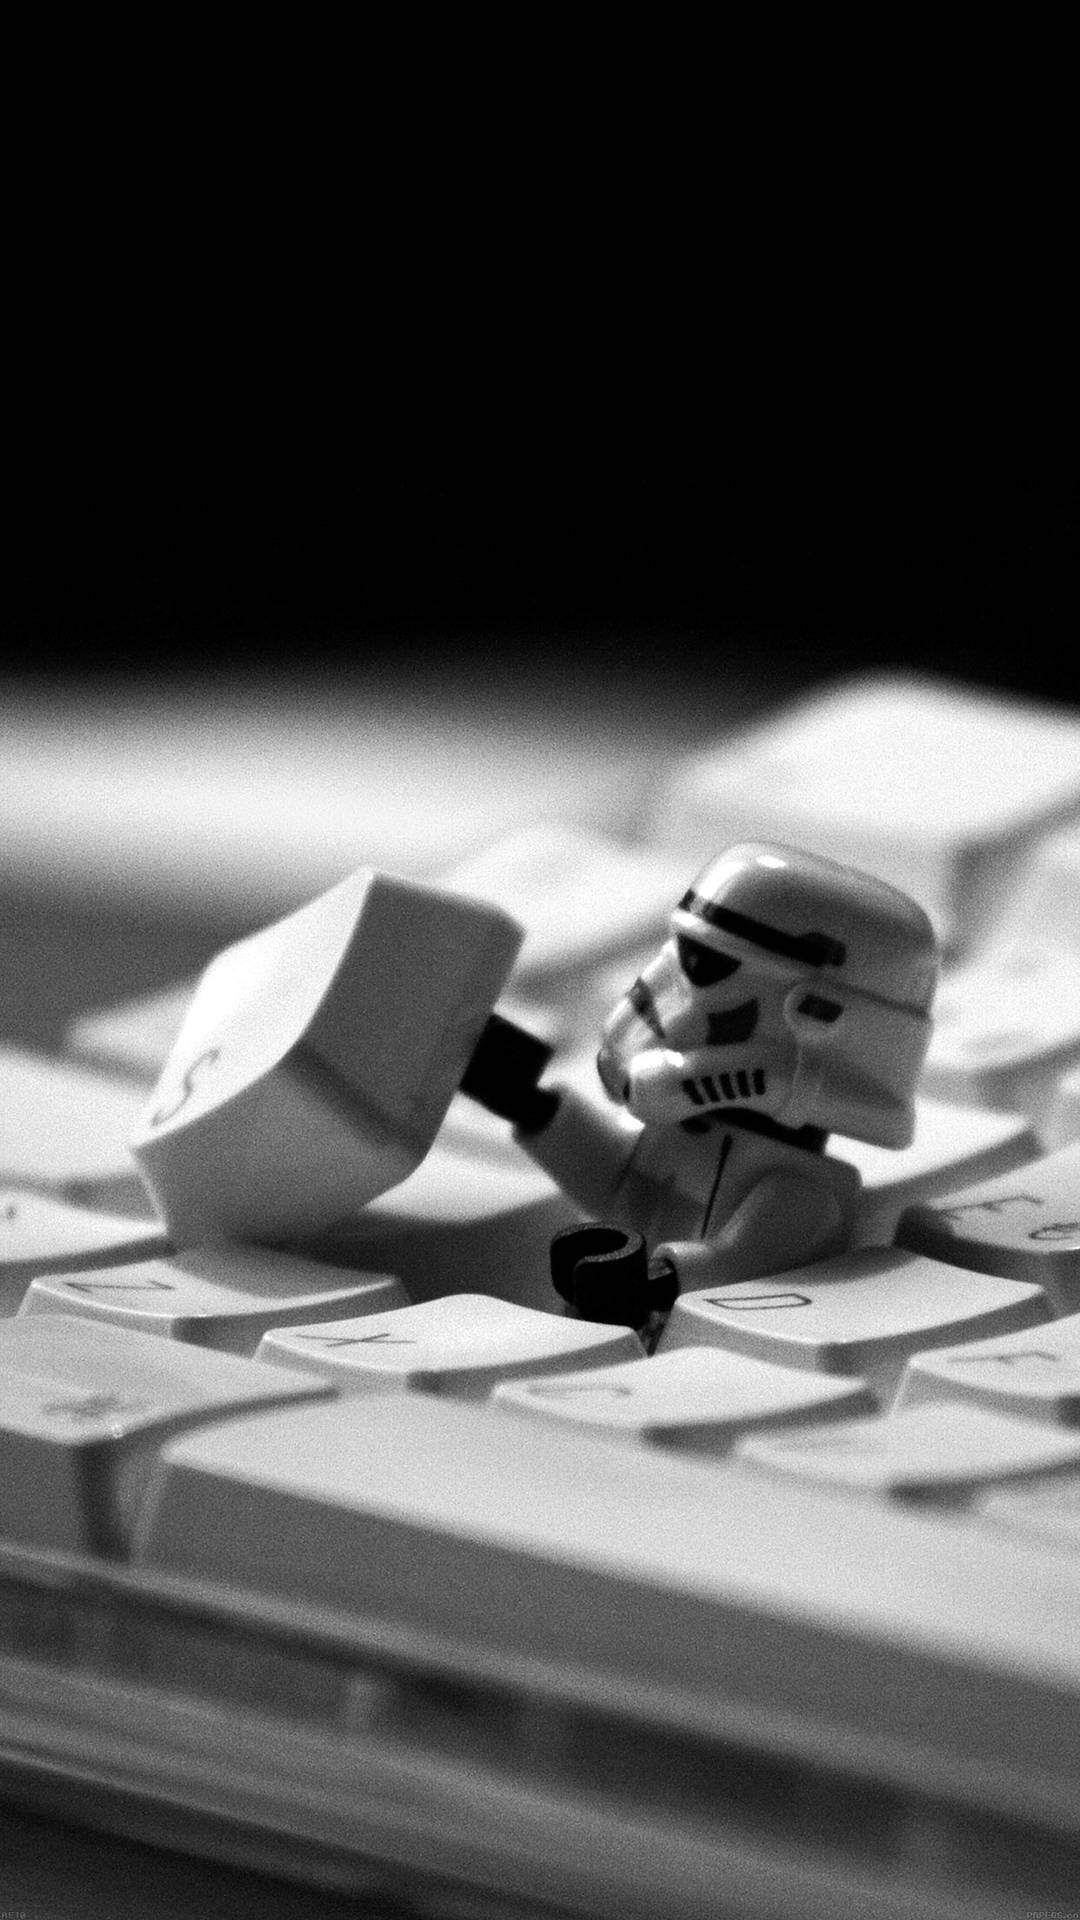 Star Wars Ipad Lego Stormtrooper Keyboard Wallpaper